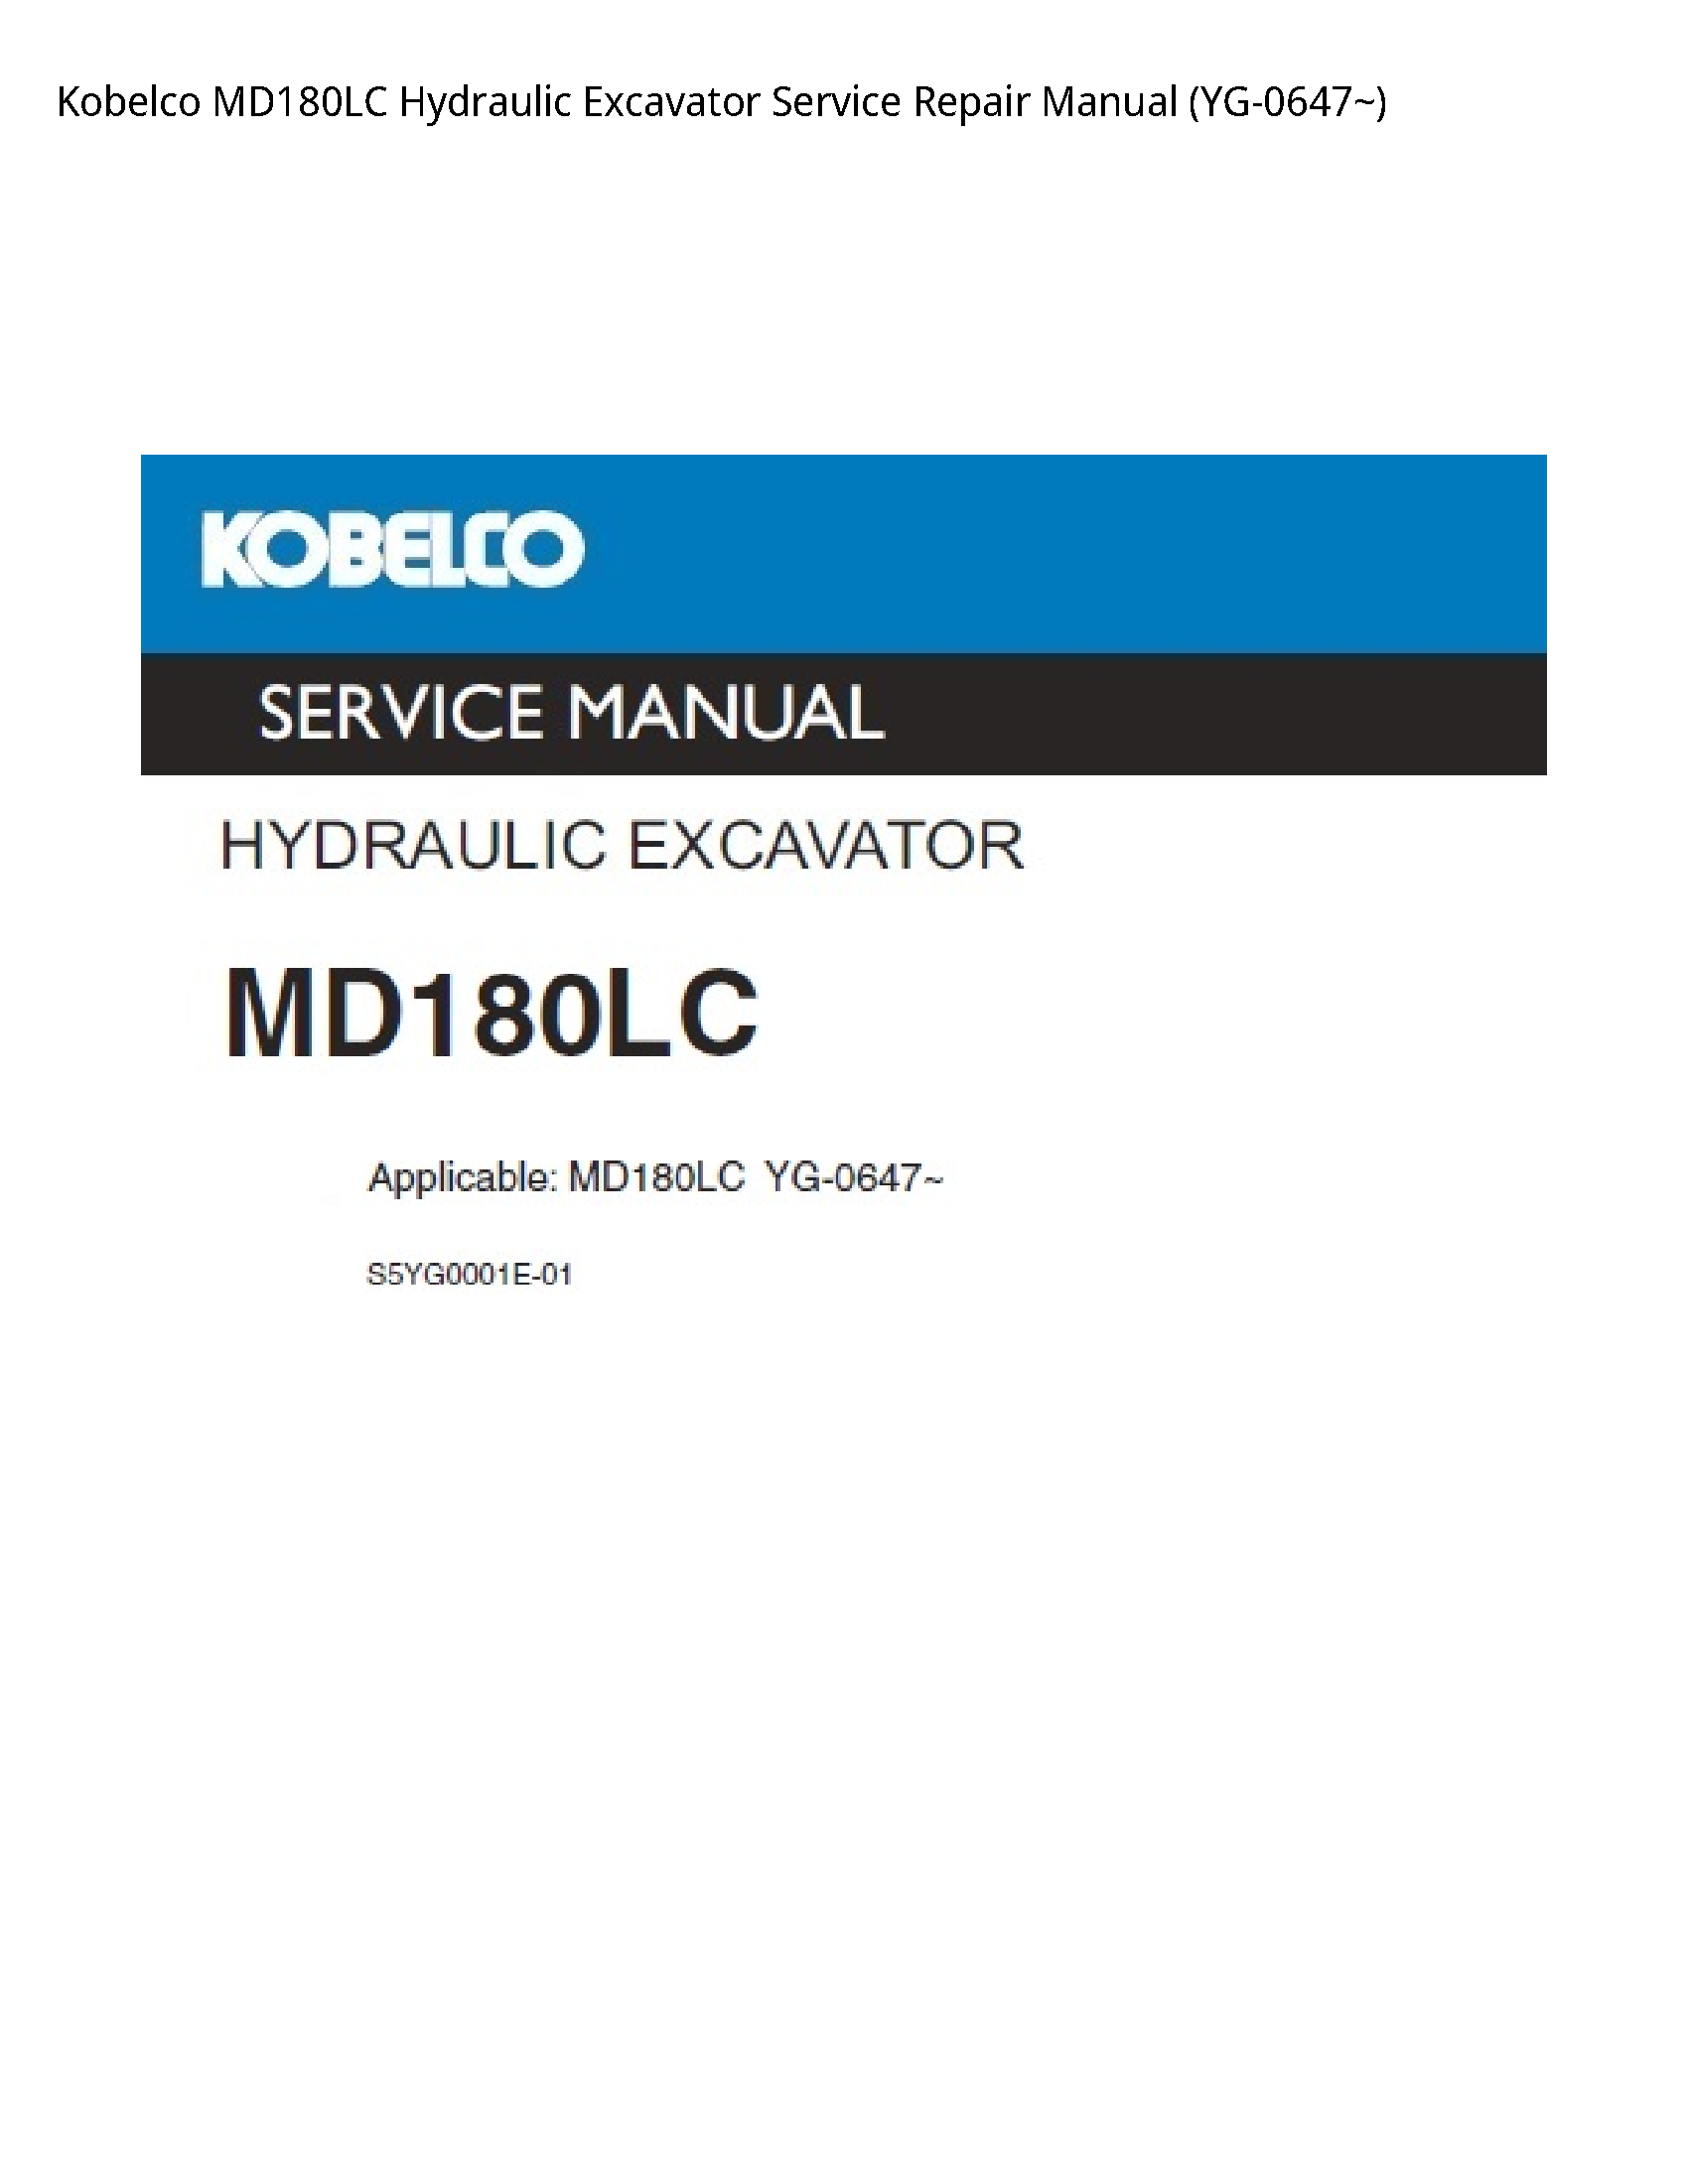 Kobelco MD180LC Hydraulic Excavator manual